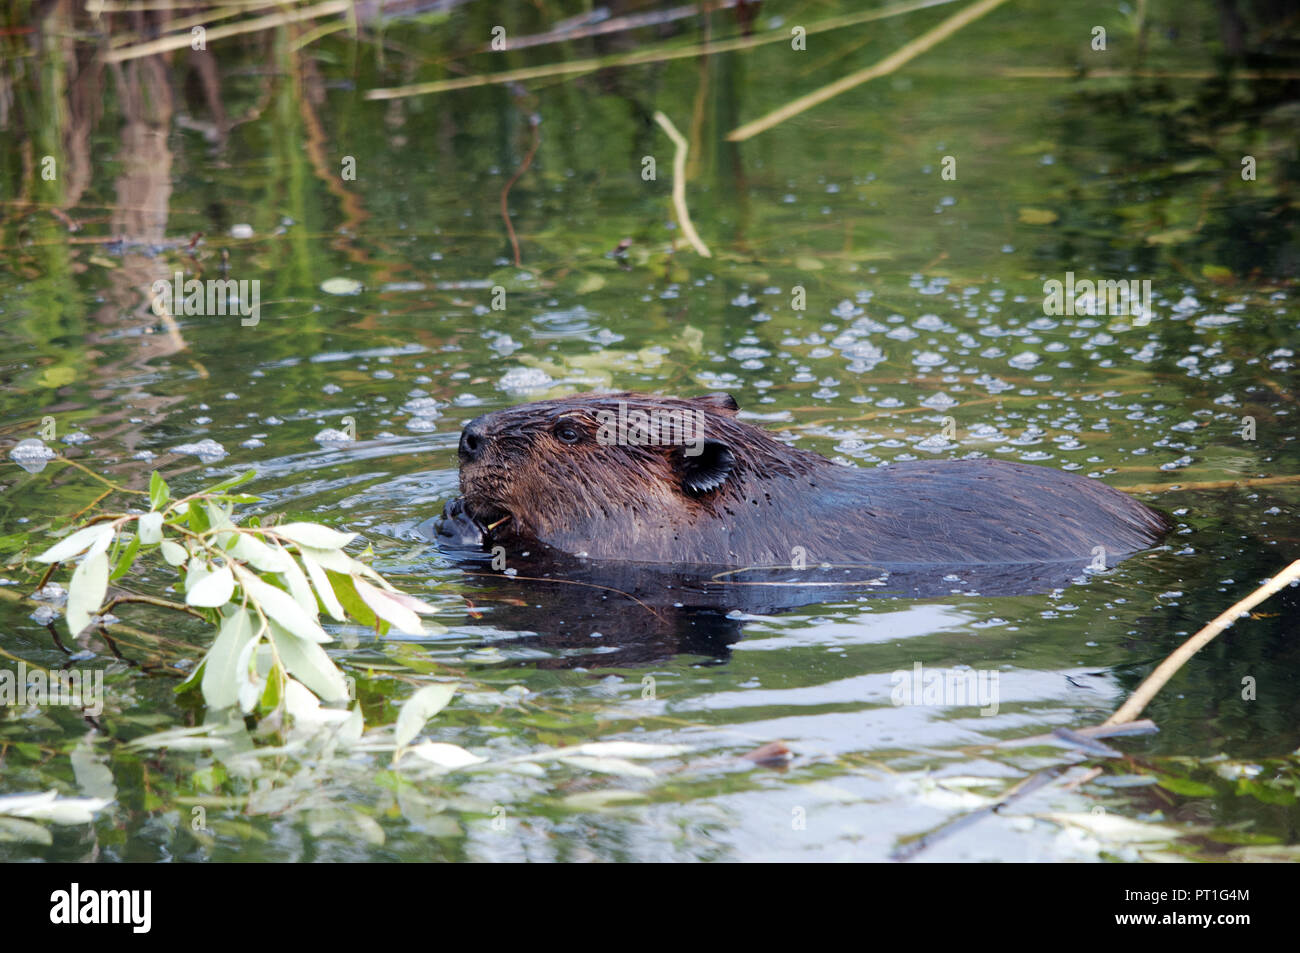 Beaver in the water enjoying its surrounding. Stock Photo